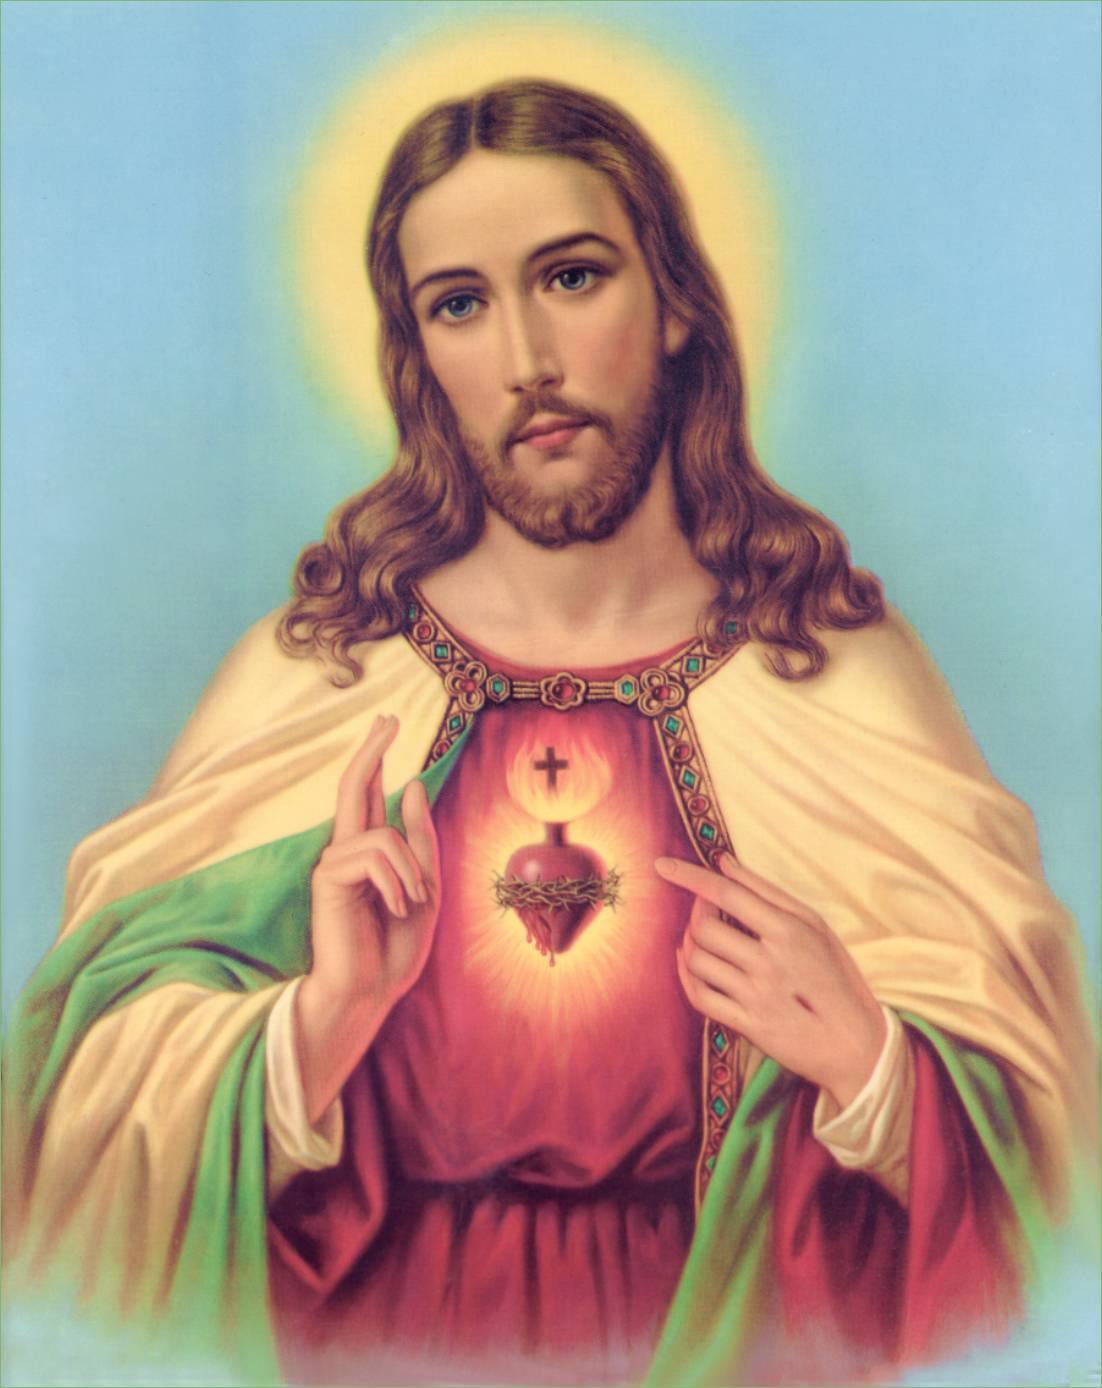 Portrait Of Jesus In Pastel Colors Wallpaper